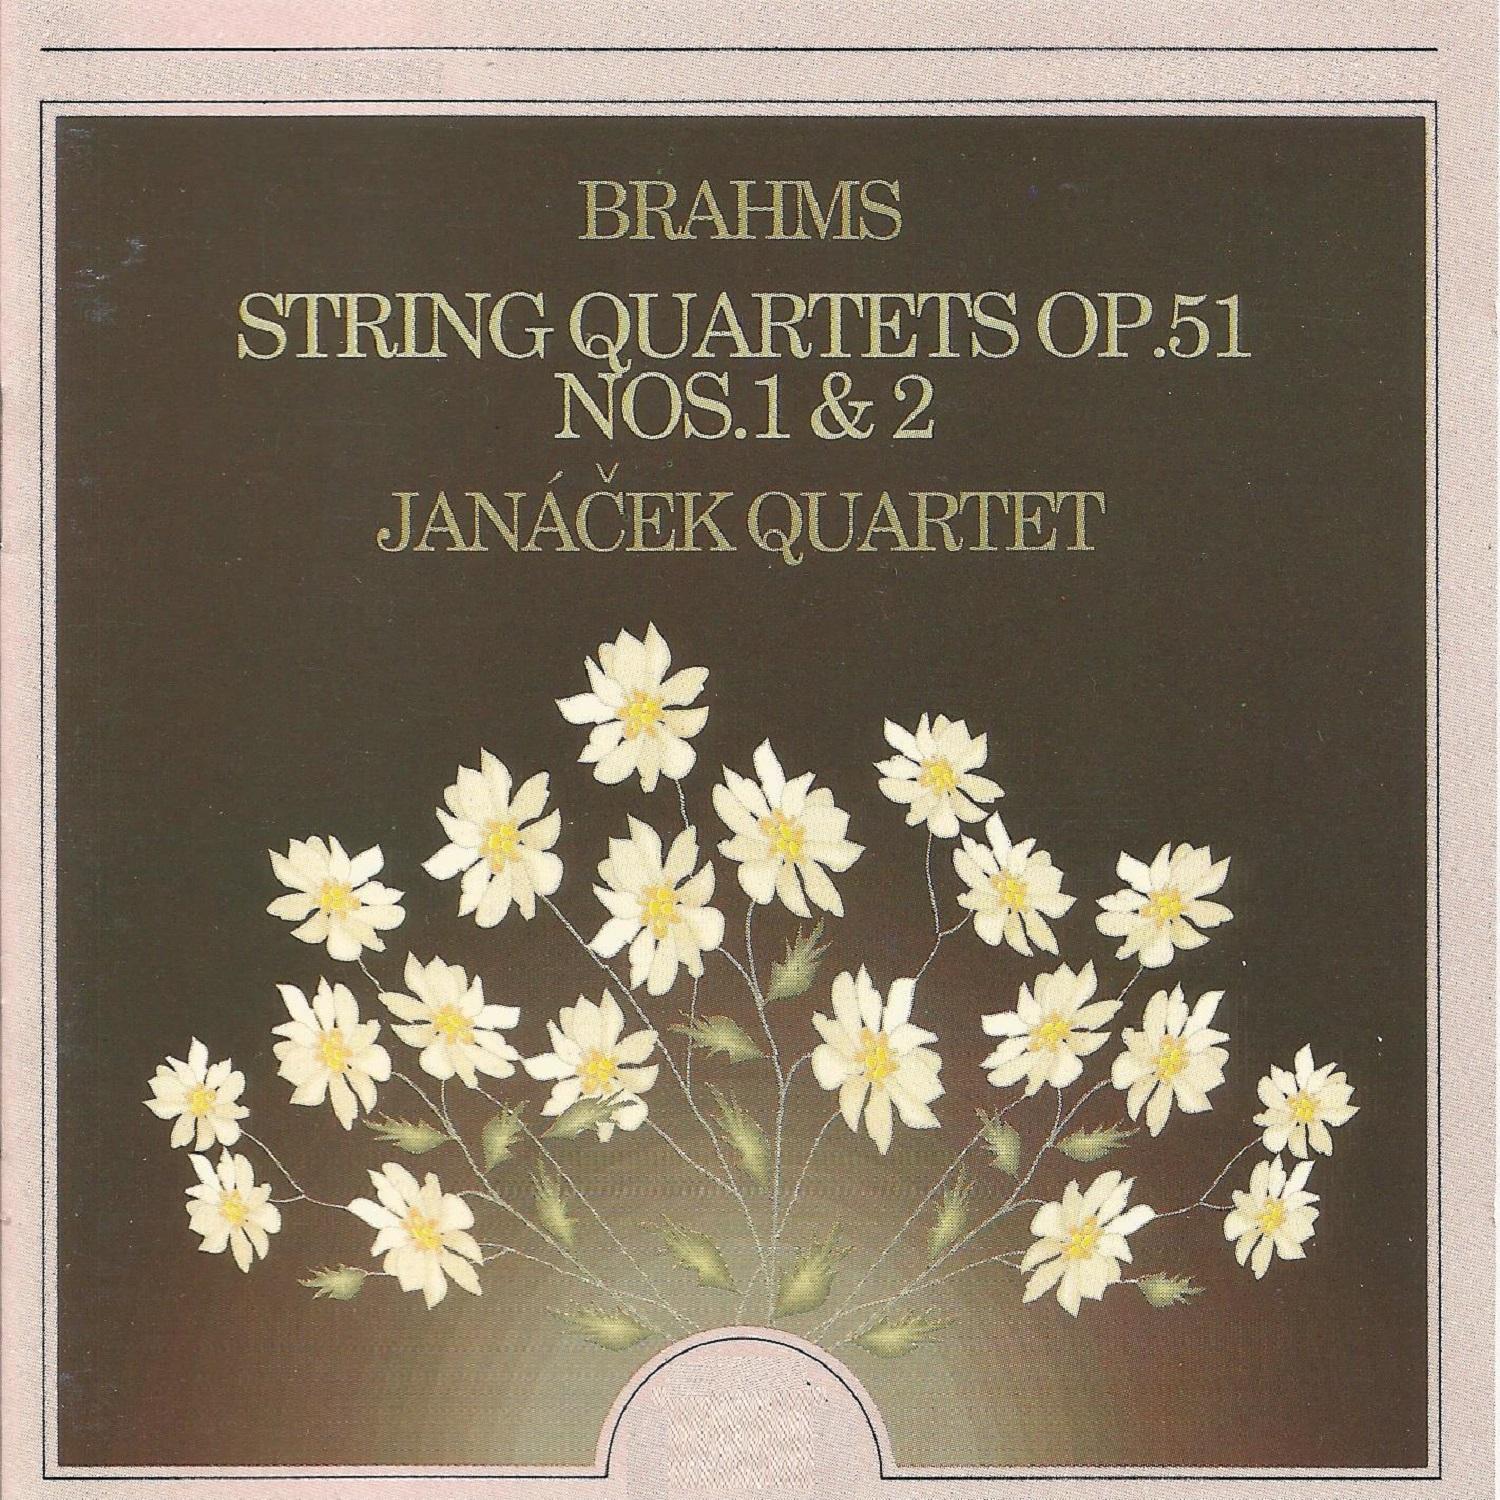 String Quartet No. 2 in A Minor, Op. 51 No. 2: IV. Finale. Allegro non assai